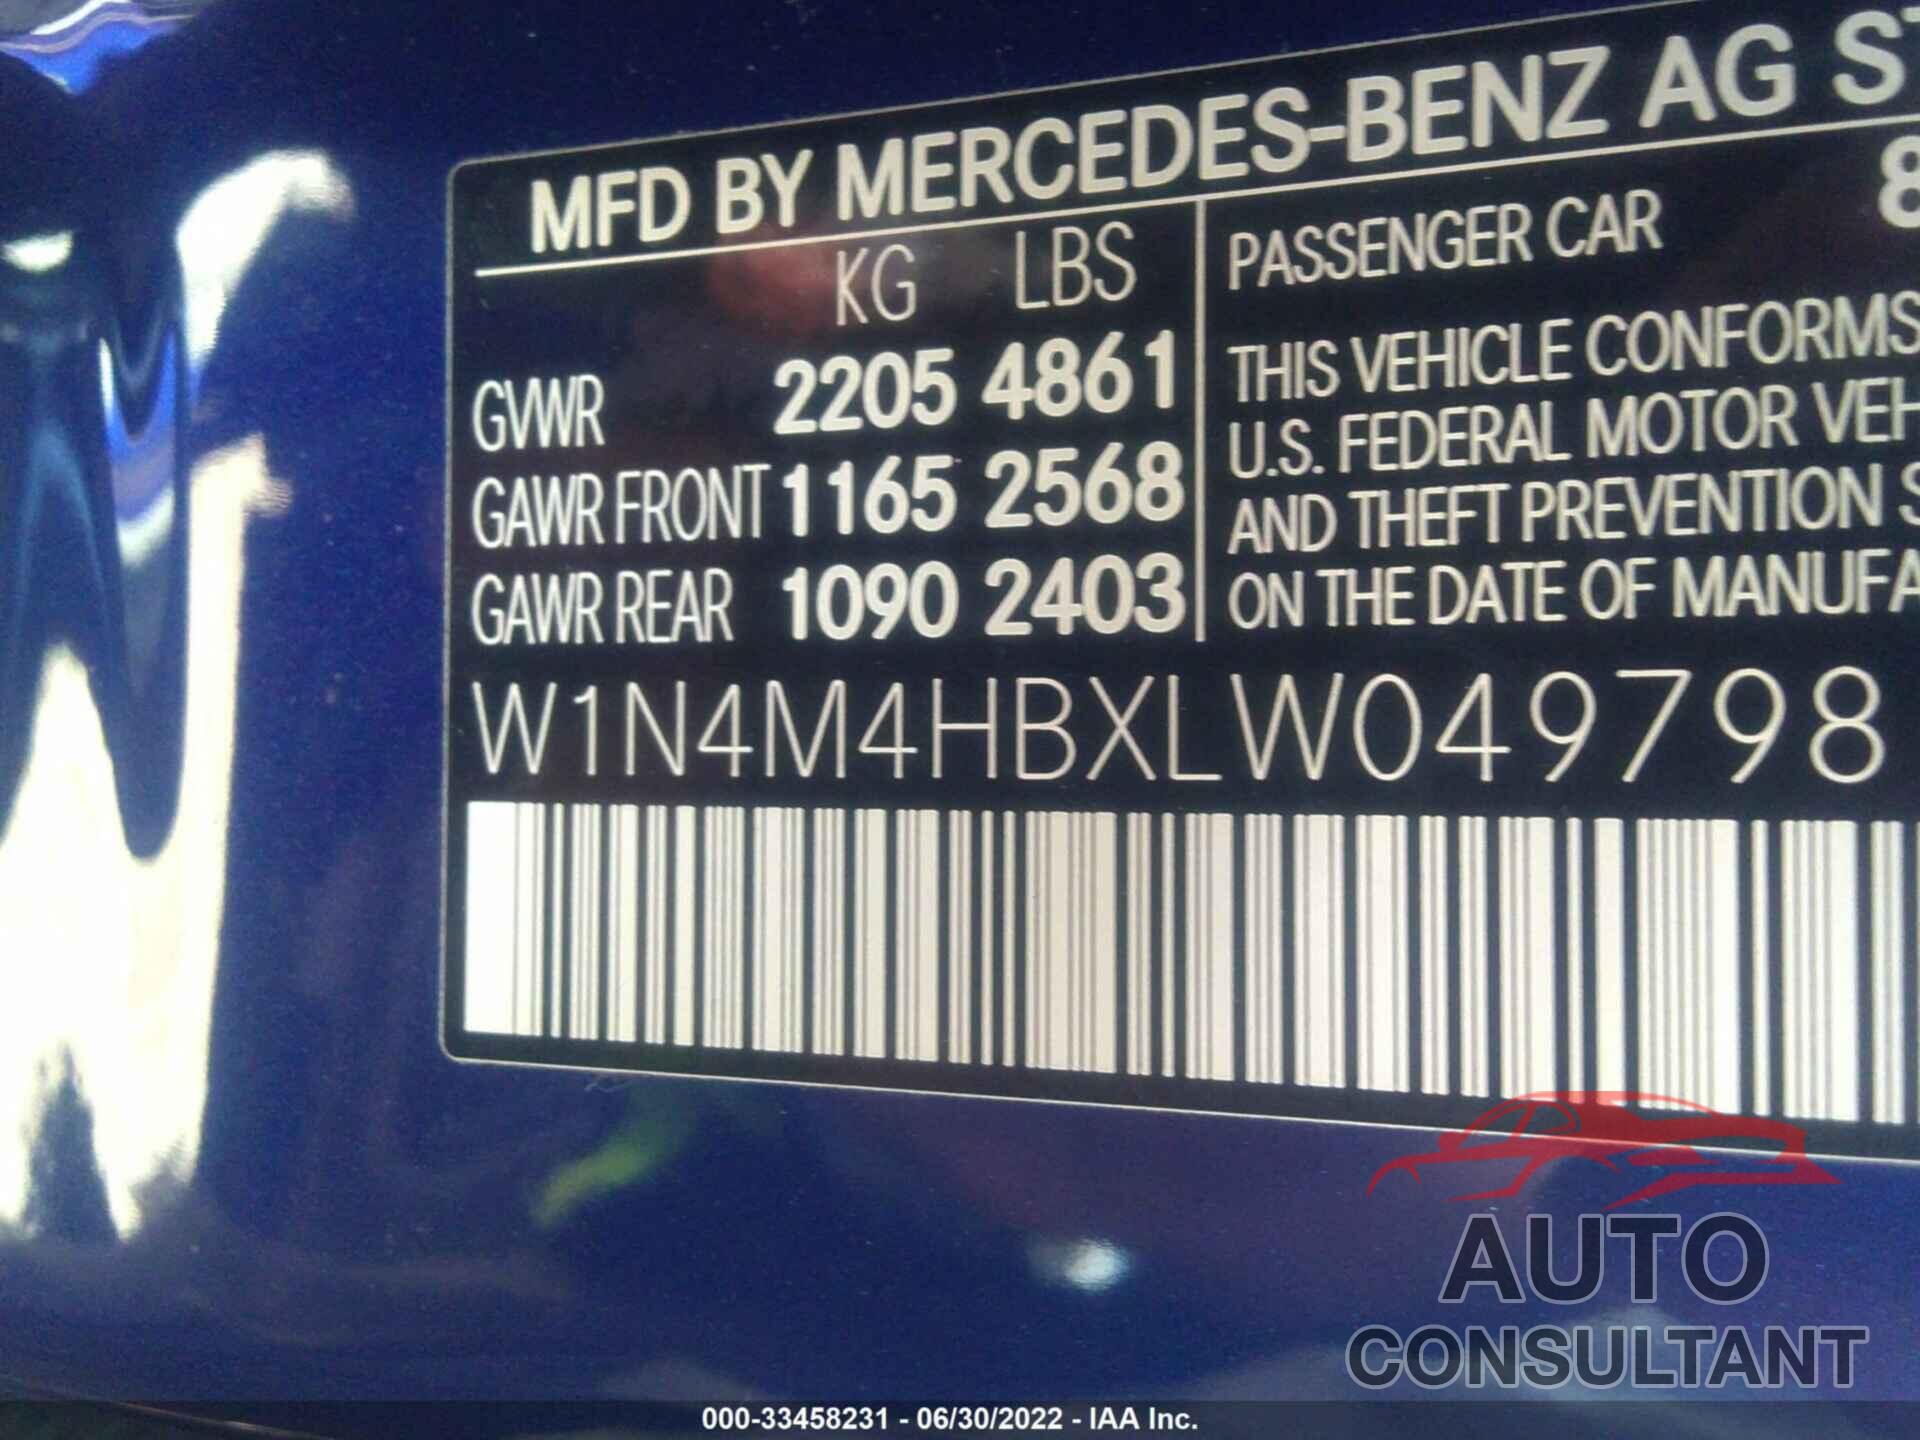 MERCEDES-BENZ GLB 2020 - W1N4M4HBXLW049798